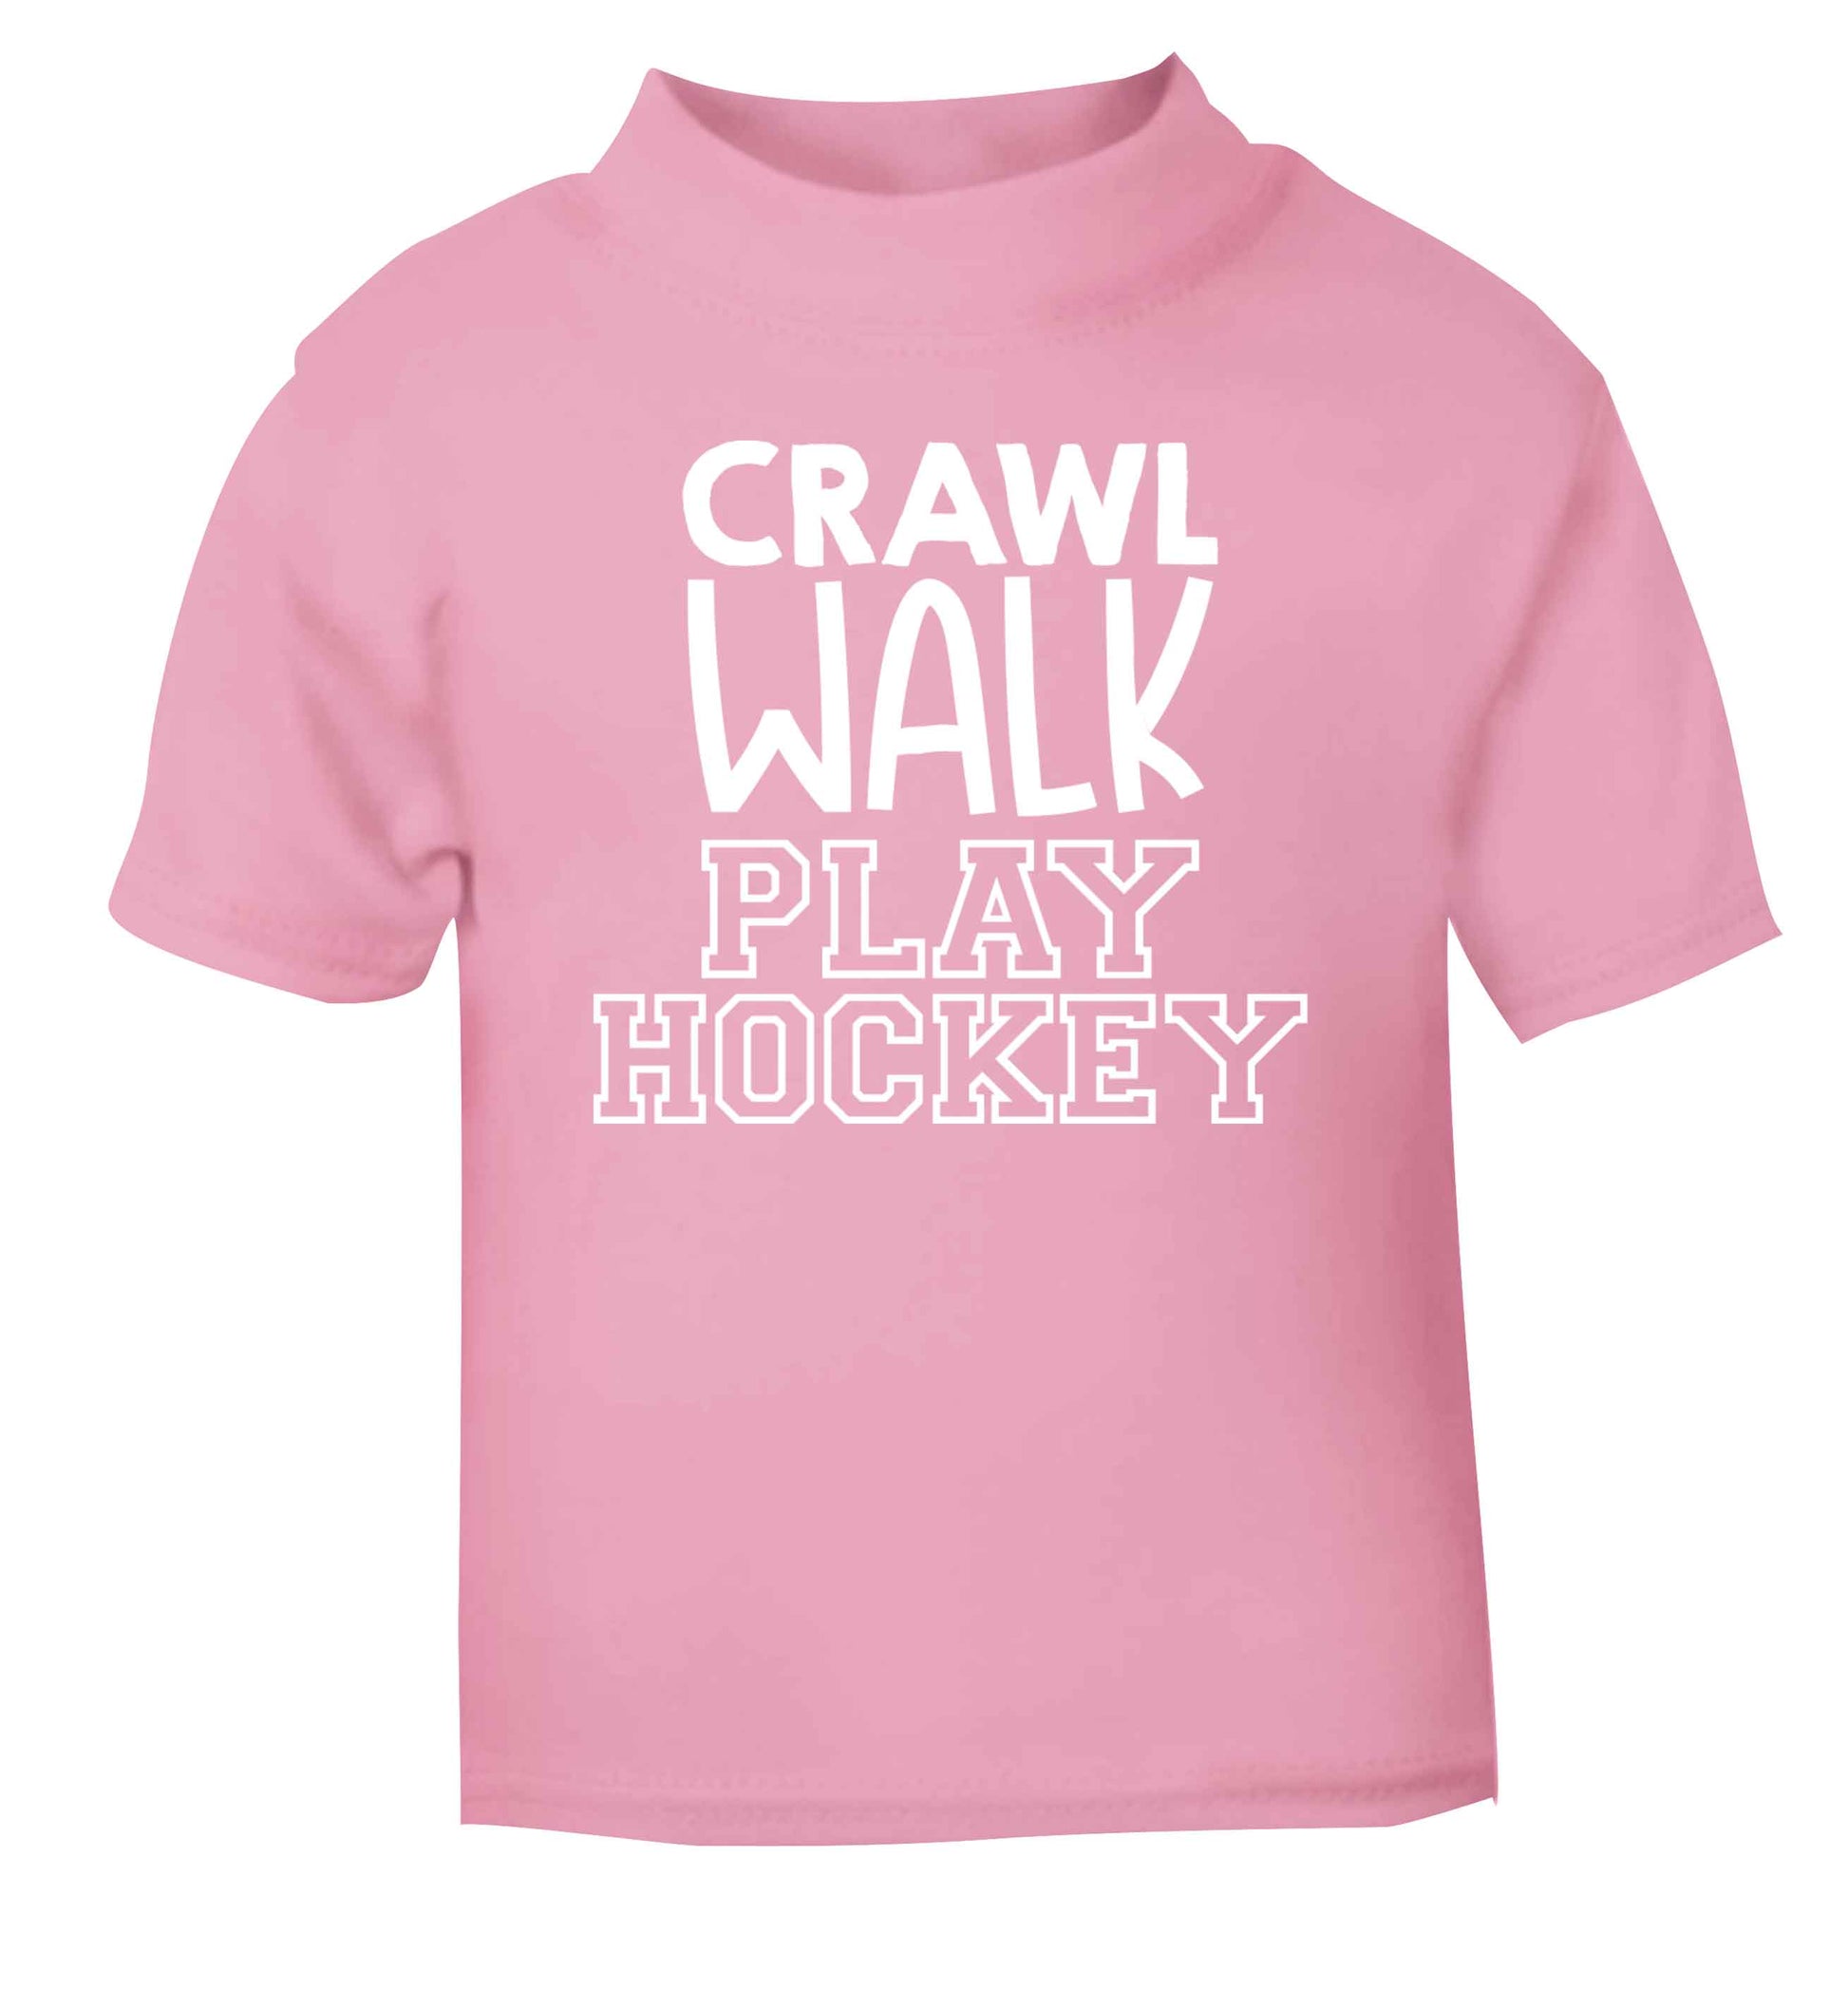 Crawl walk play hockey light pink Baby Toddler Tshirt 2 Years